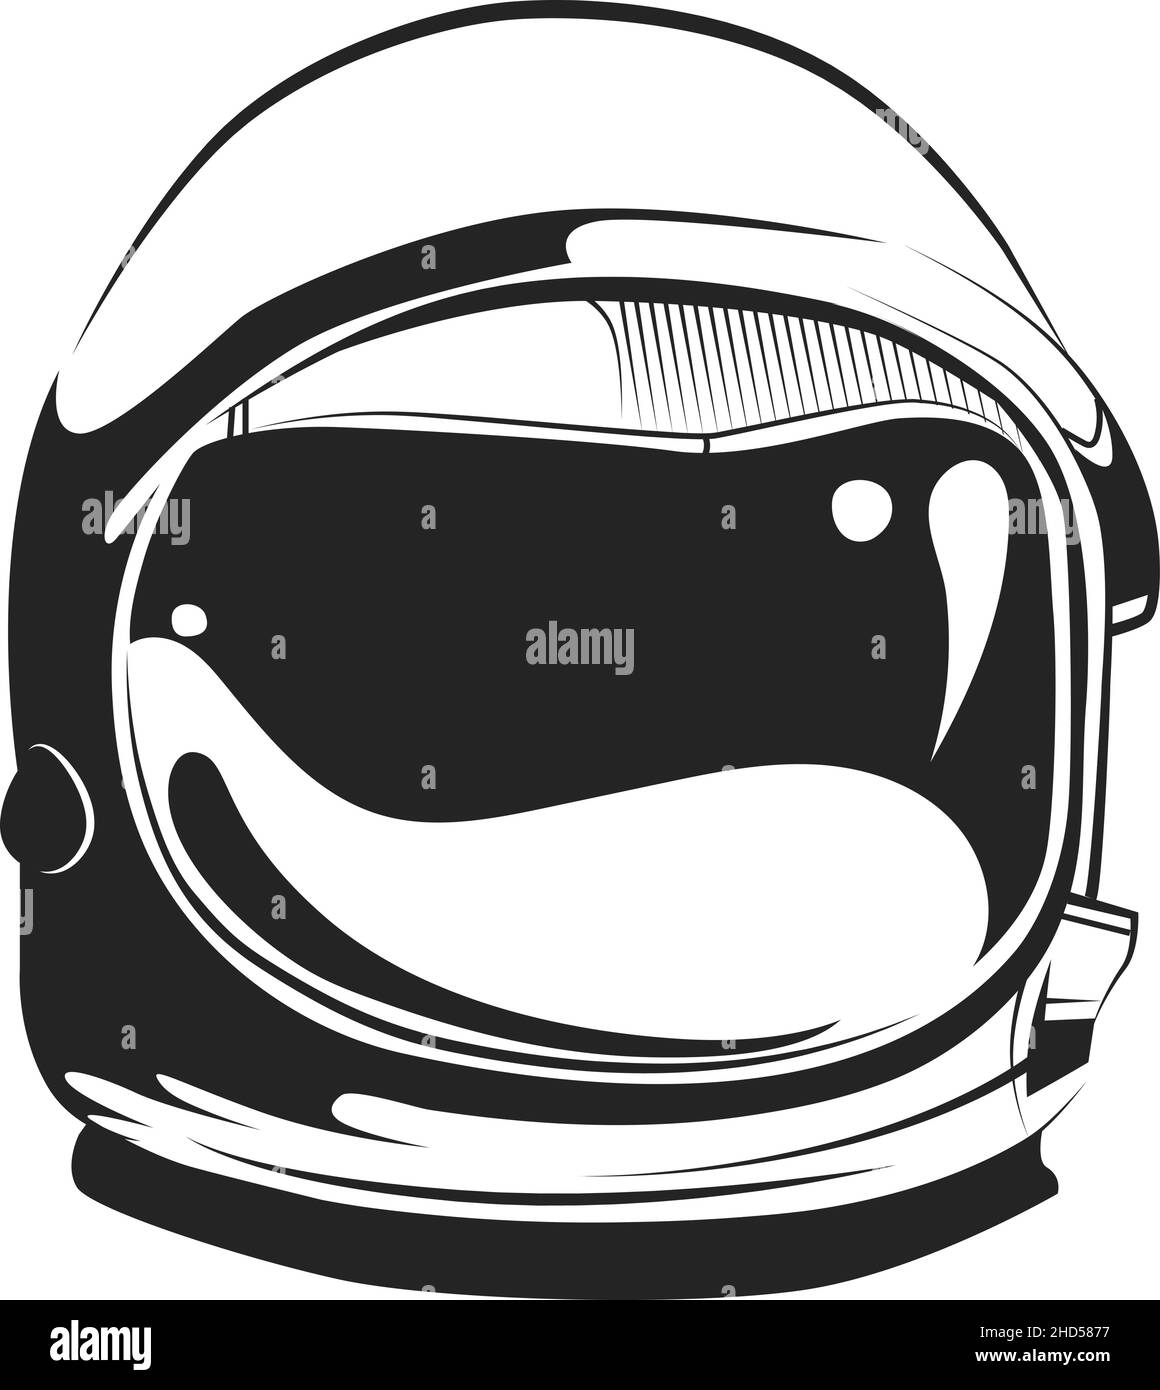 Space helmet icon. Spacesuit part. Astronaut or spaceman symbol Stock Vector